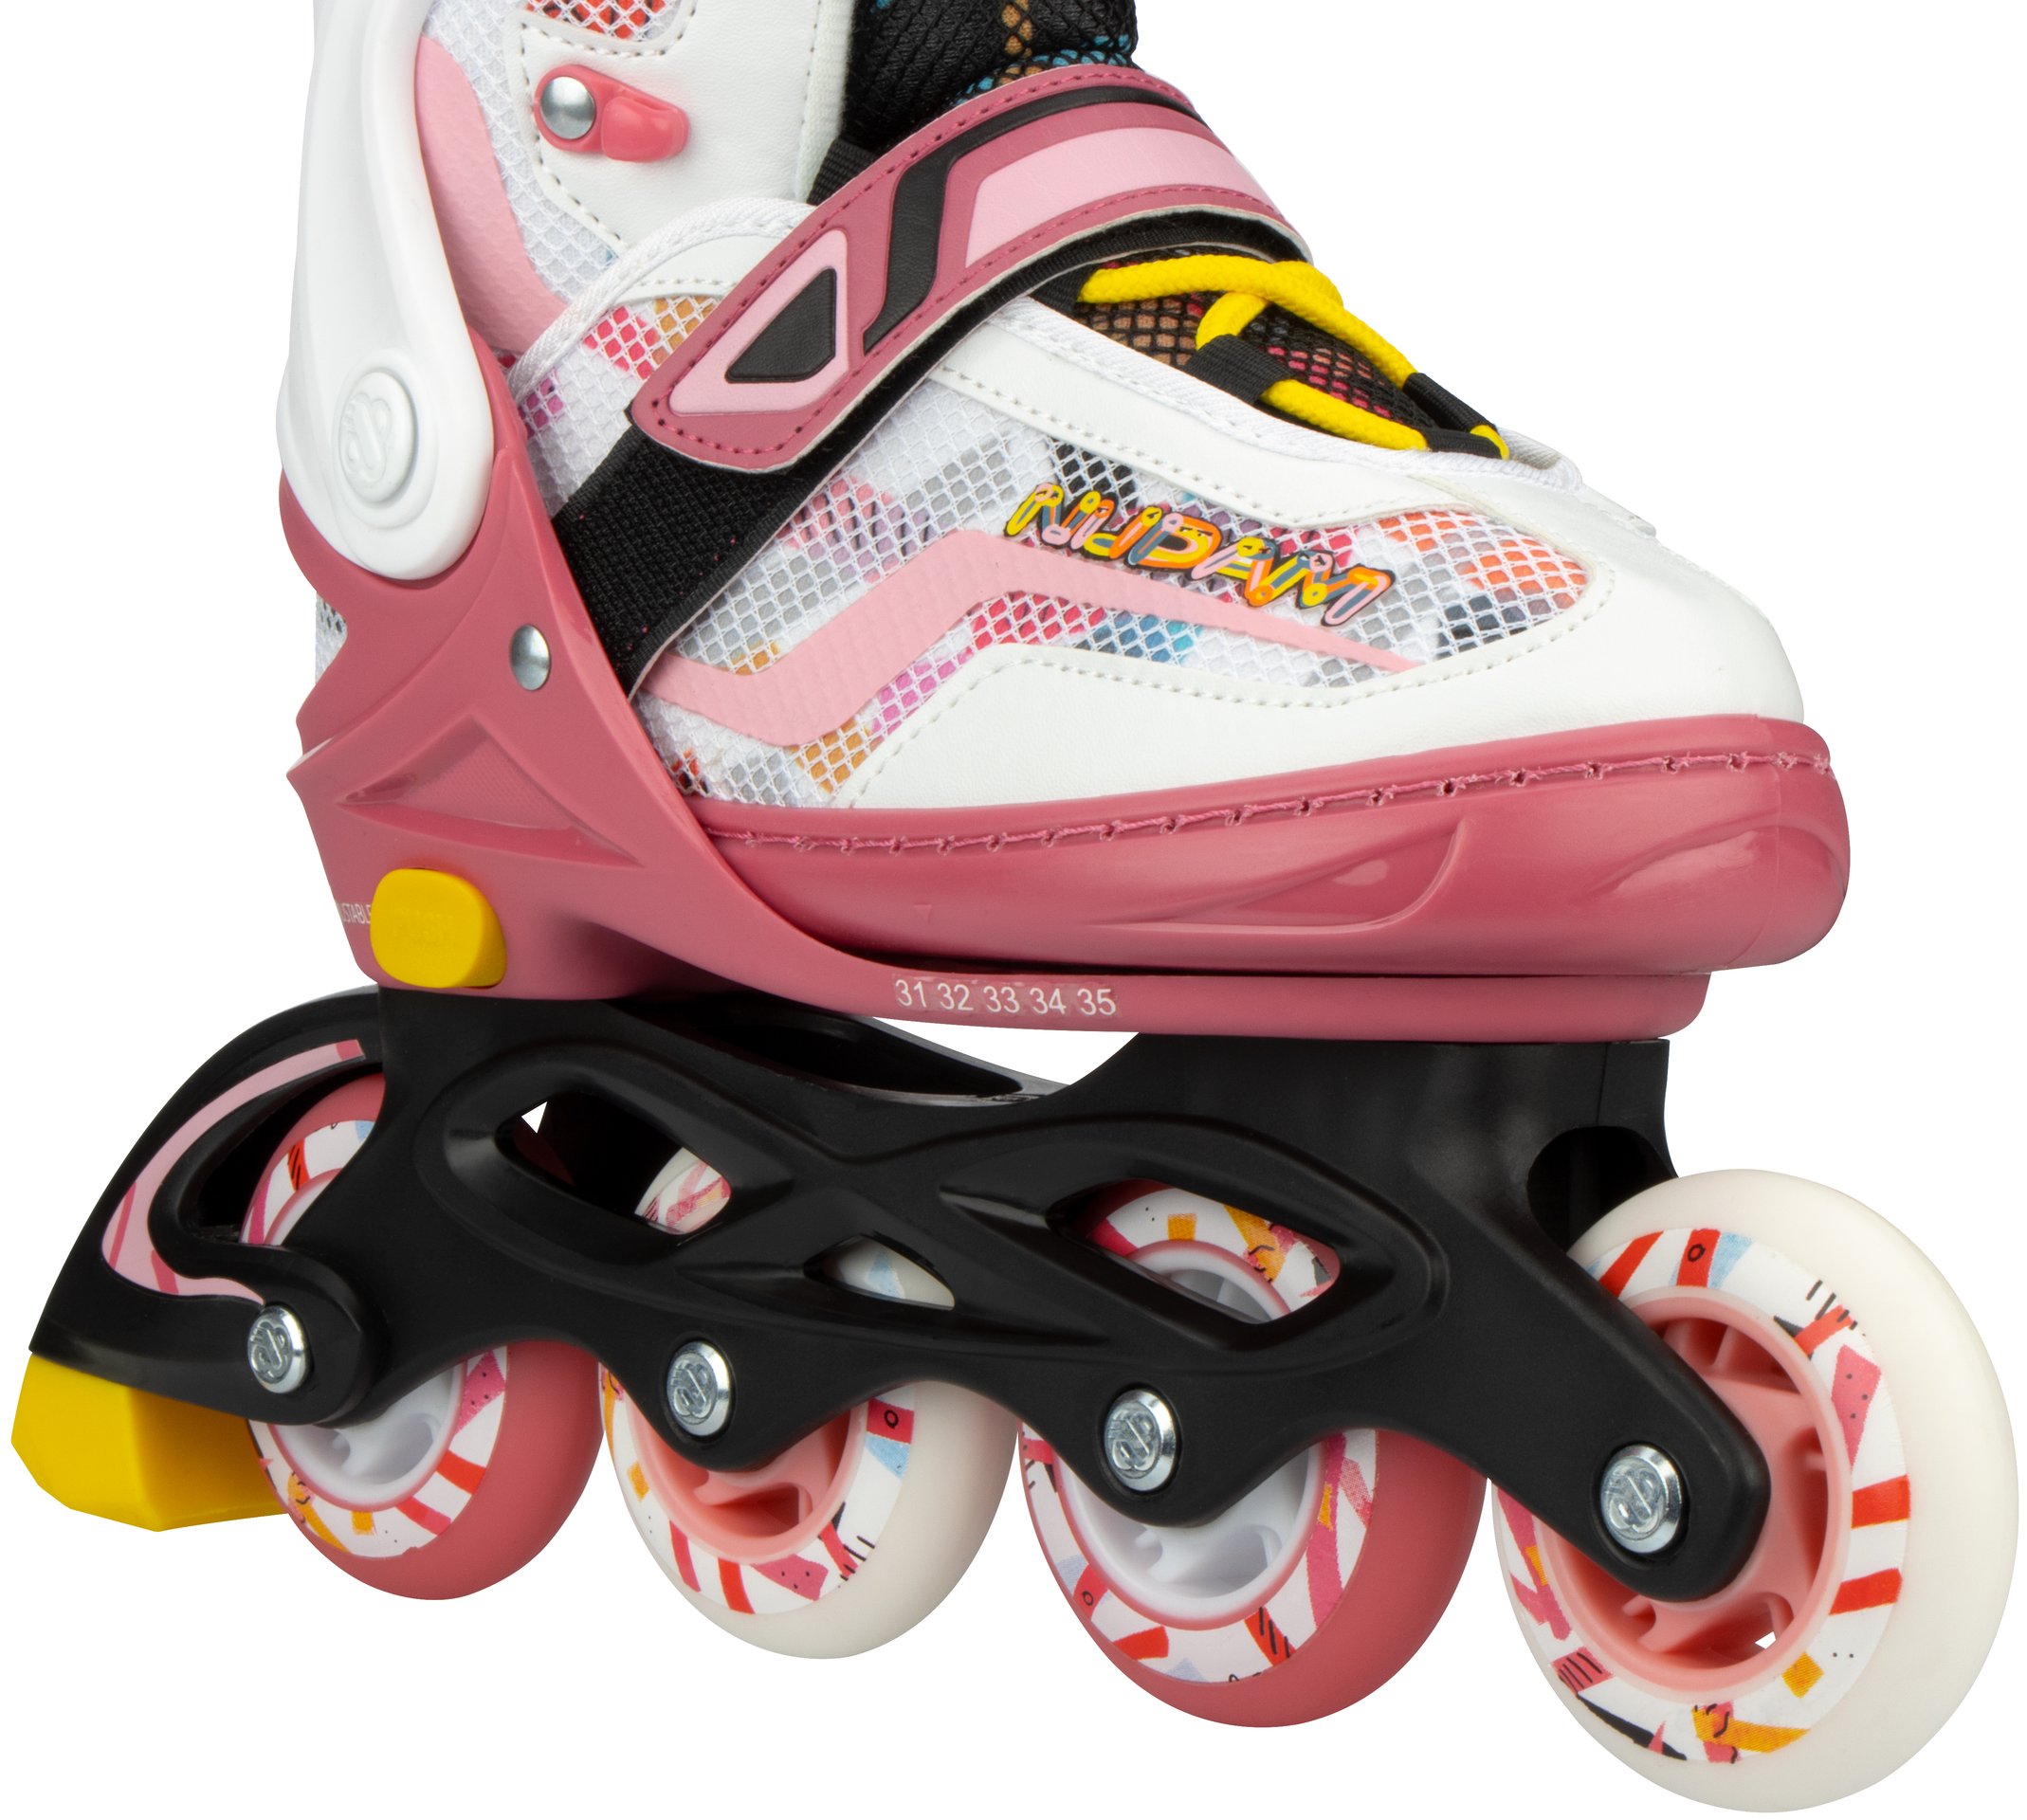 Inline Skates Adjustable - Fruity Fro-yo